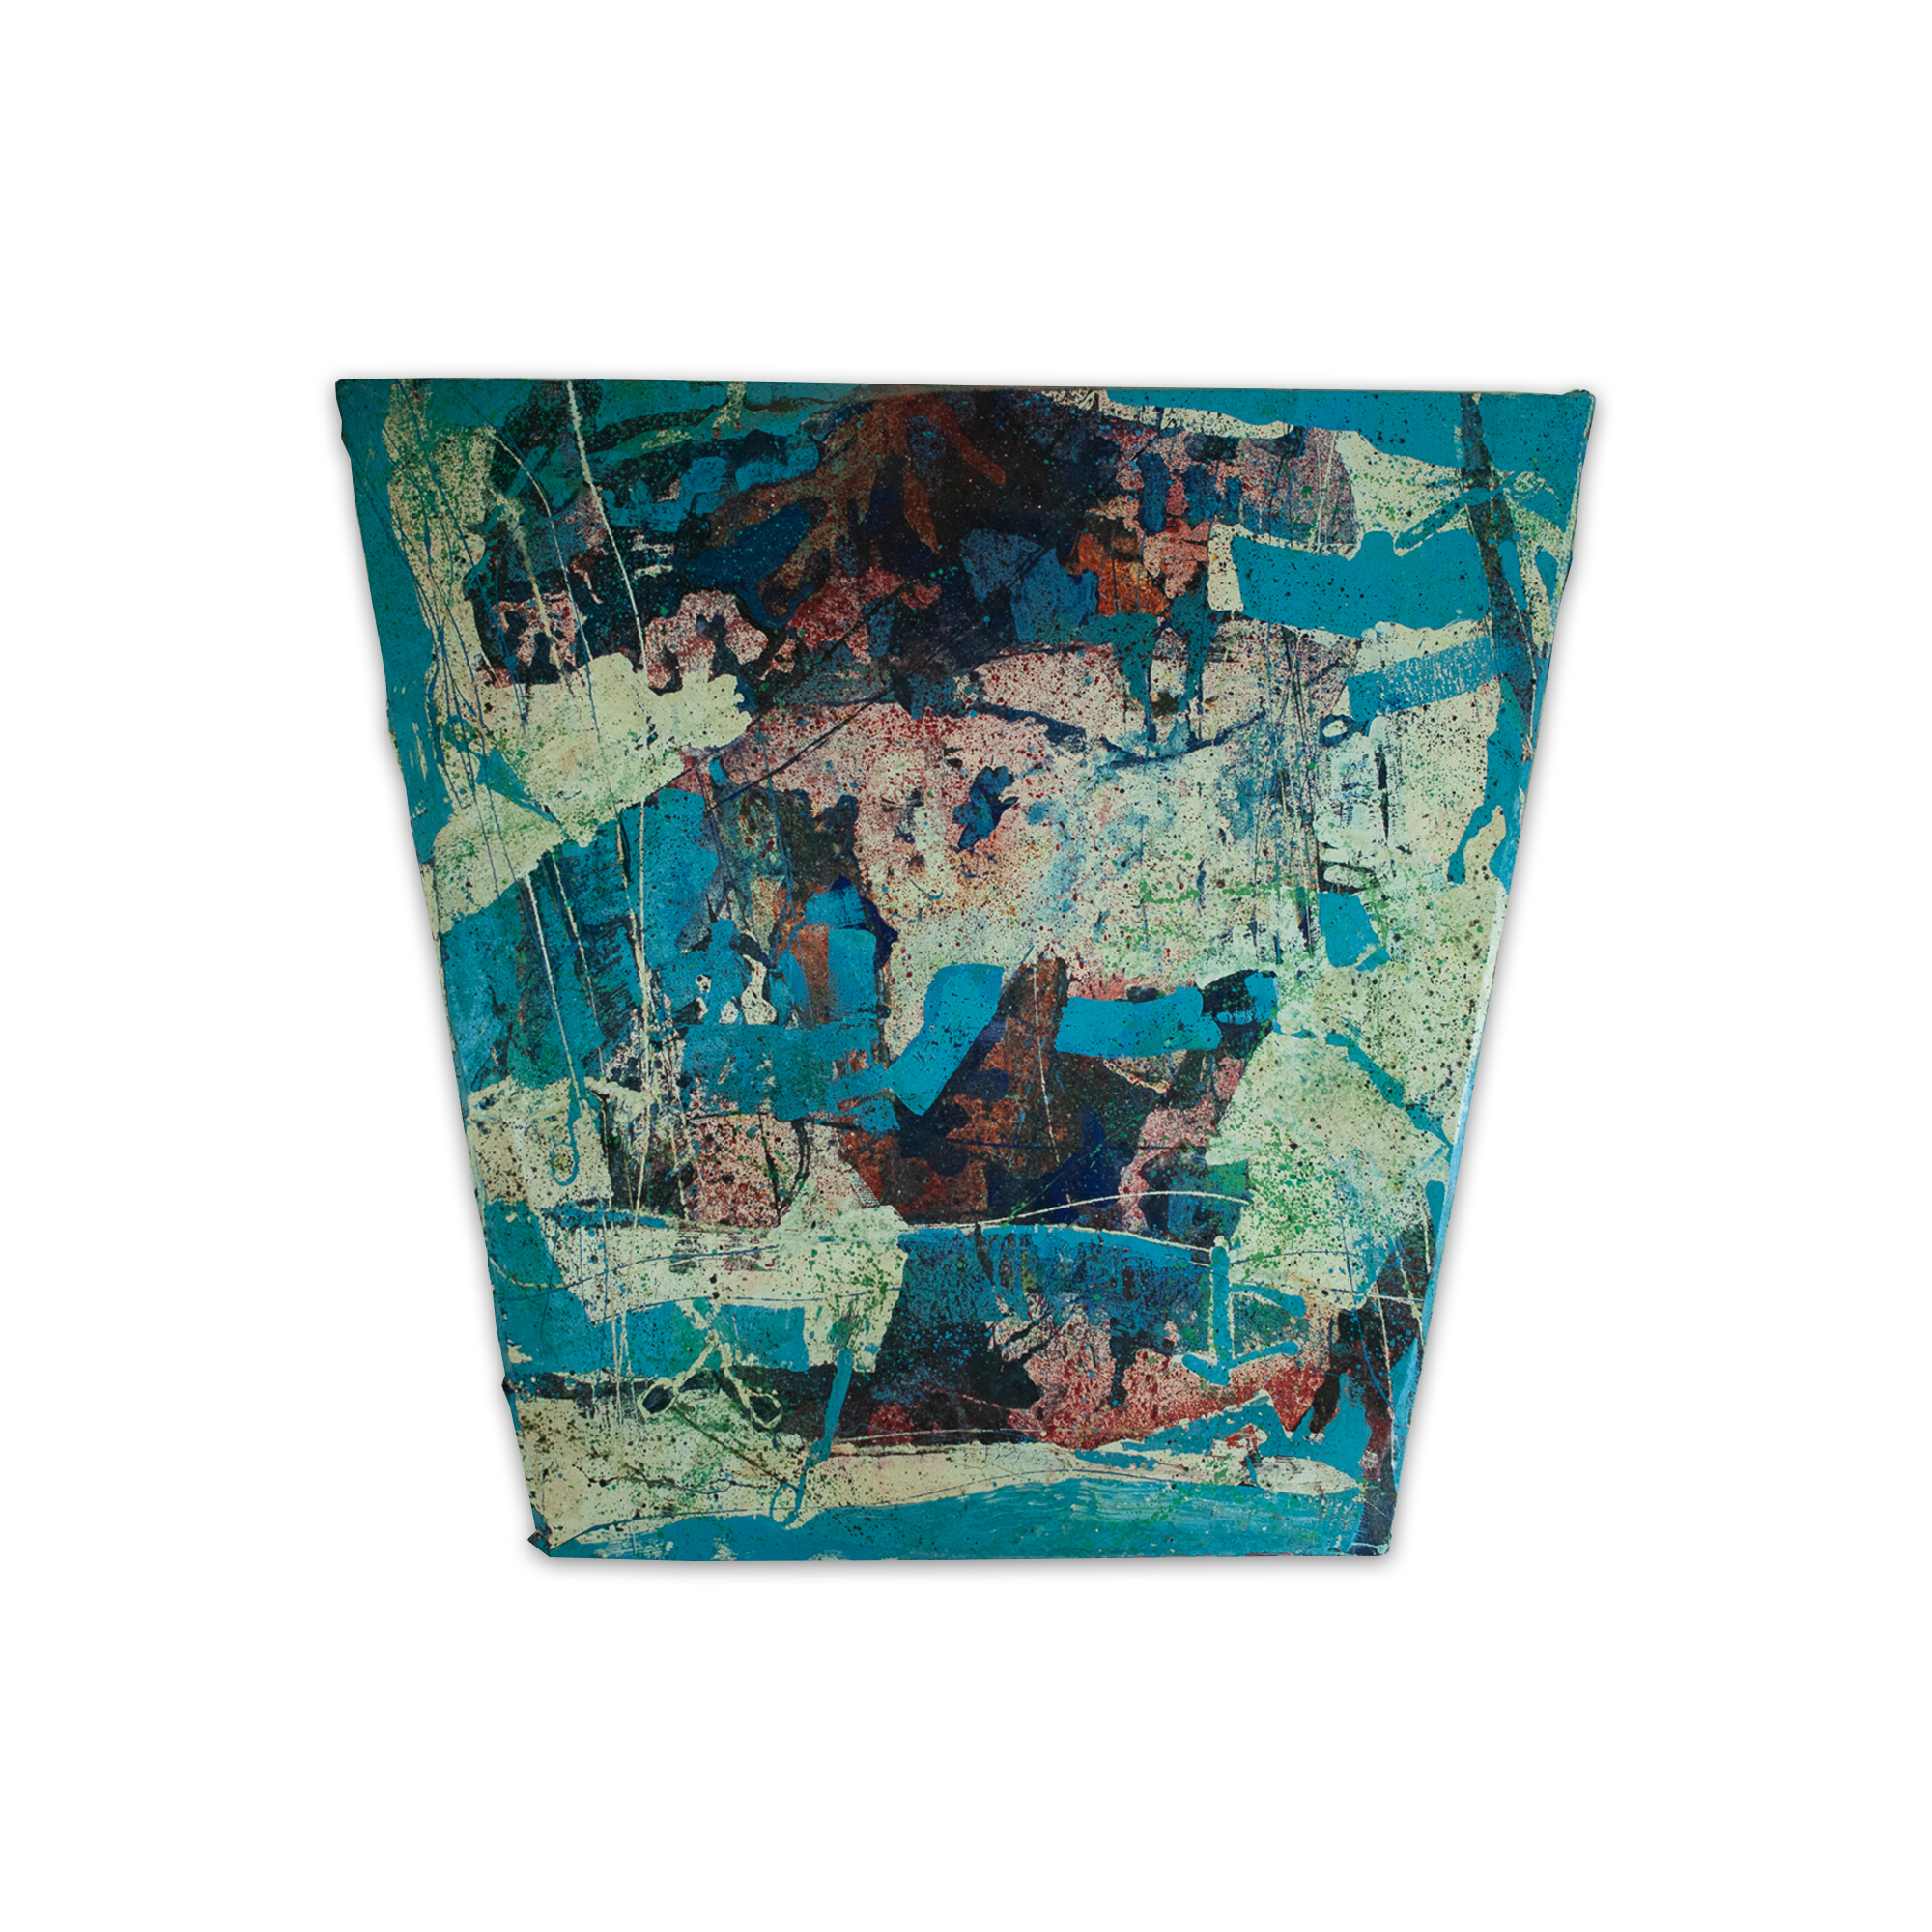 Blauwe Triangel - peinture à l'huile - 2001 - 1.45 x 1.20